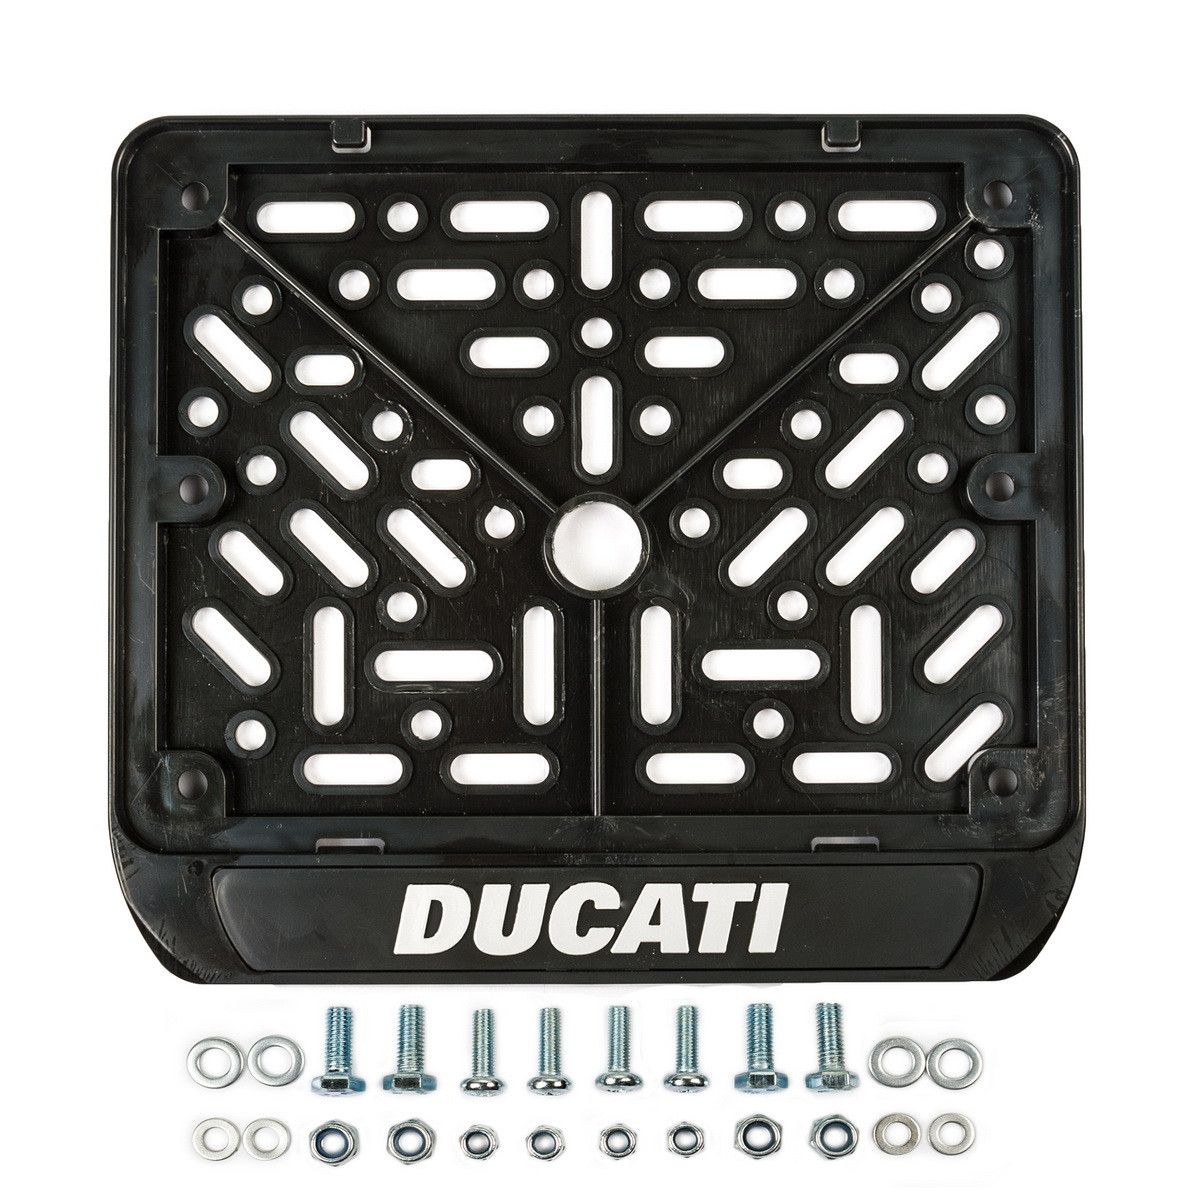 GENERIC DUCATI01 рамка для номера мотоцикла нового образца DUCATI